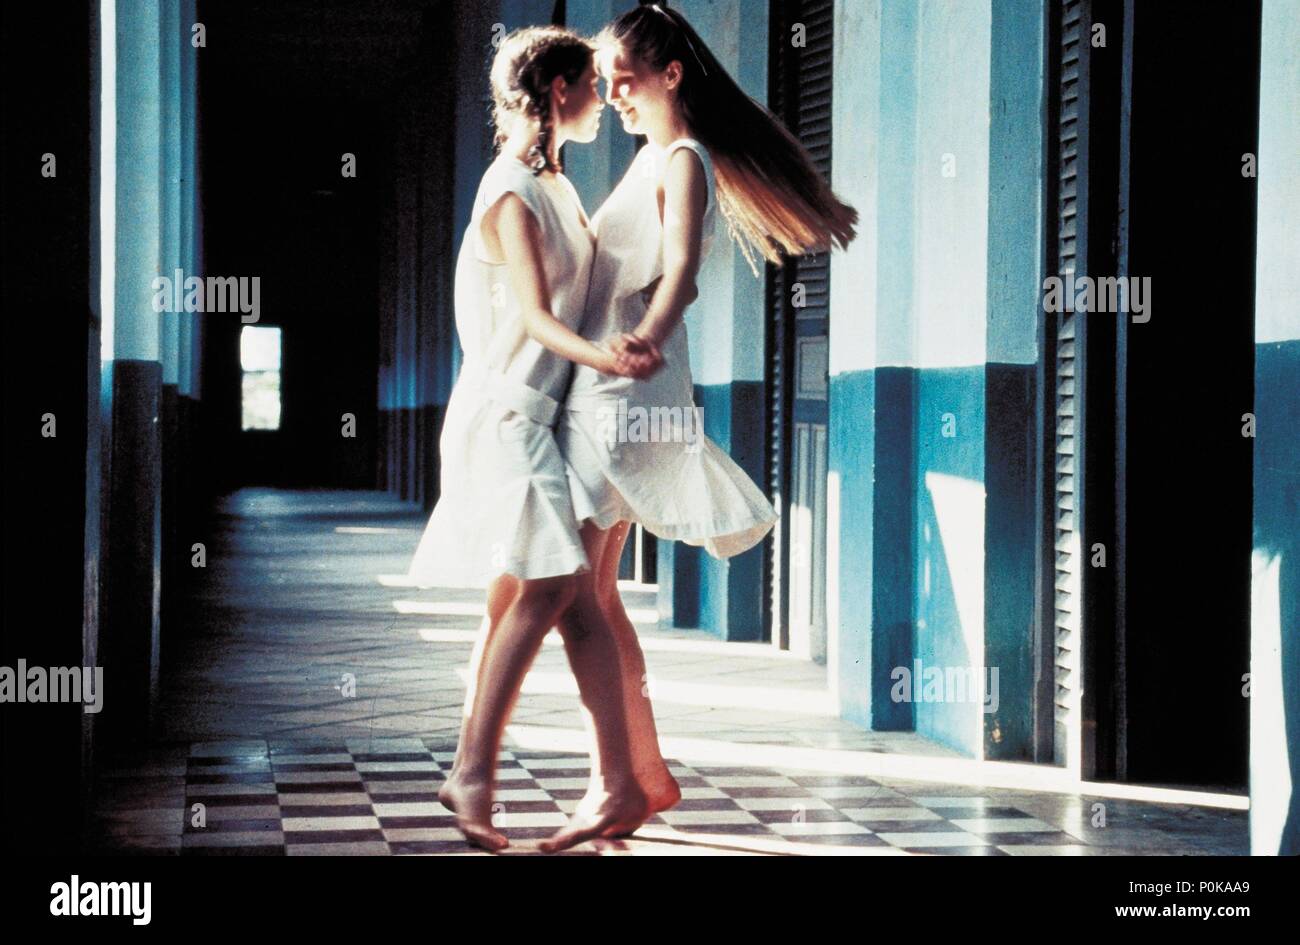 Original Film Title: L' AMANT. English Title: THE LOVER. Film Director: JEAN -JACQUES ANNAUD. Year: 1992. Stars: JANE MARCH. Credit: RENN/BURRILL/FILMS  A2 / Album Stock Photo - Alamy